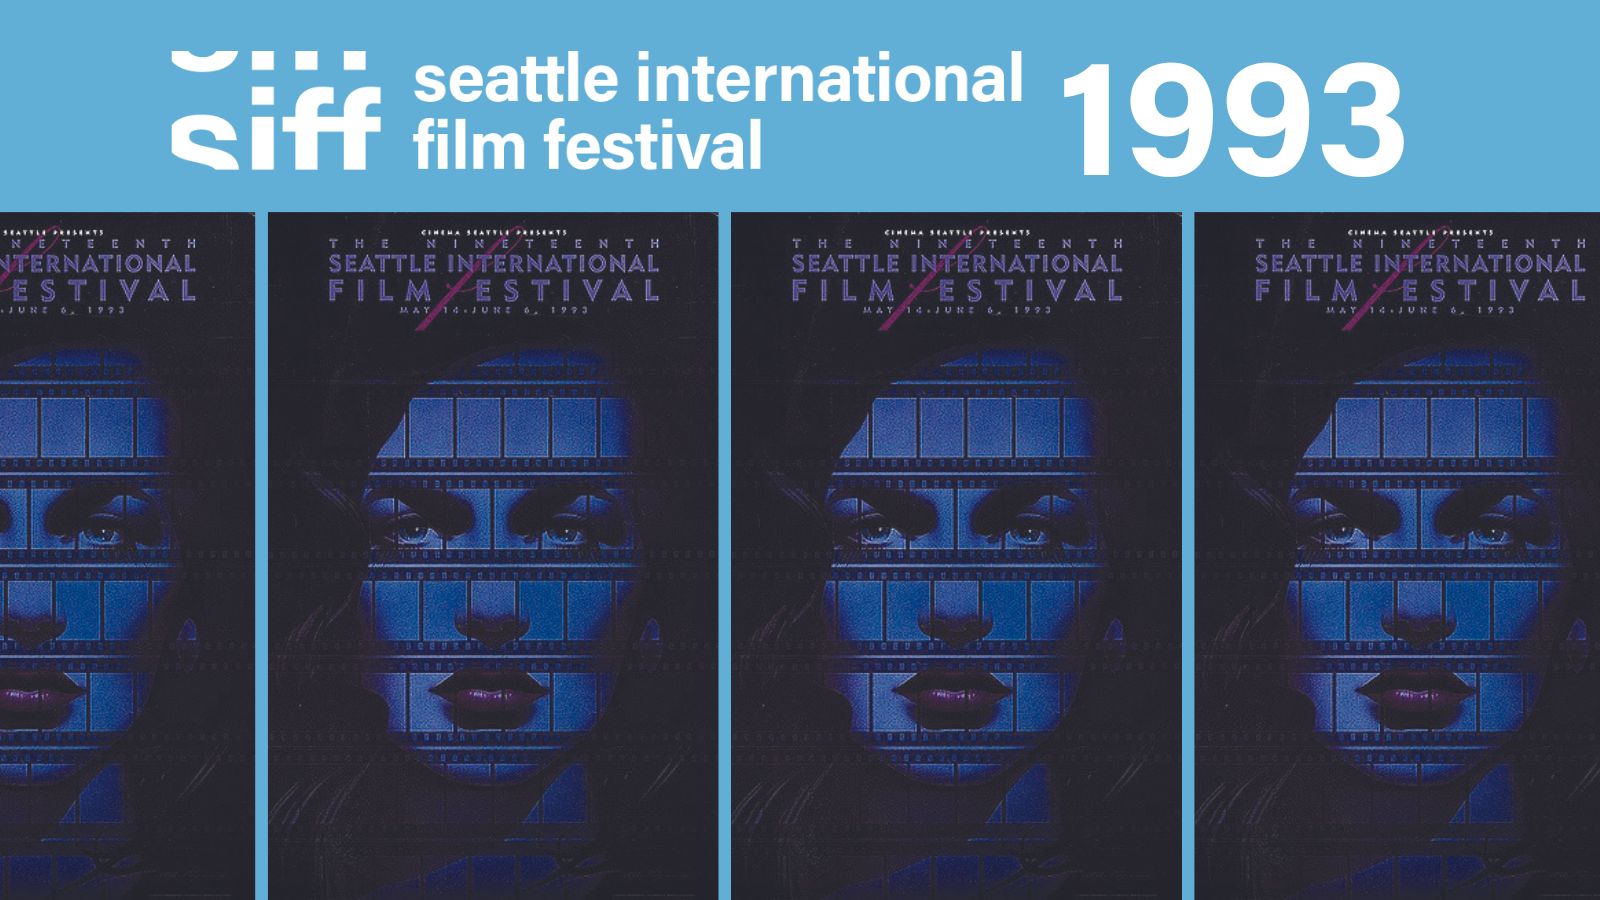 Seattle International Film Festival 1993